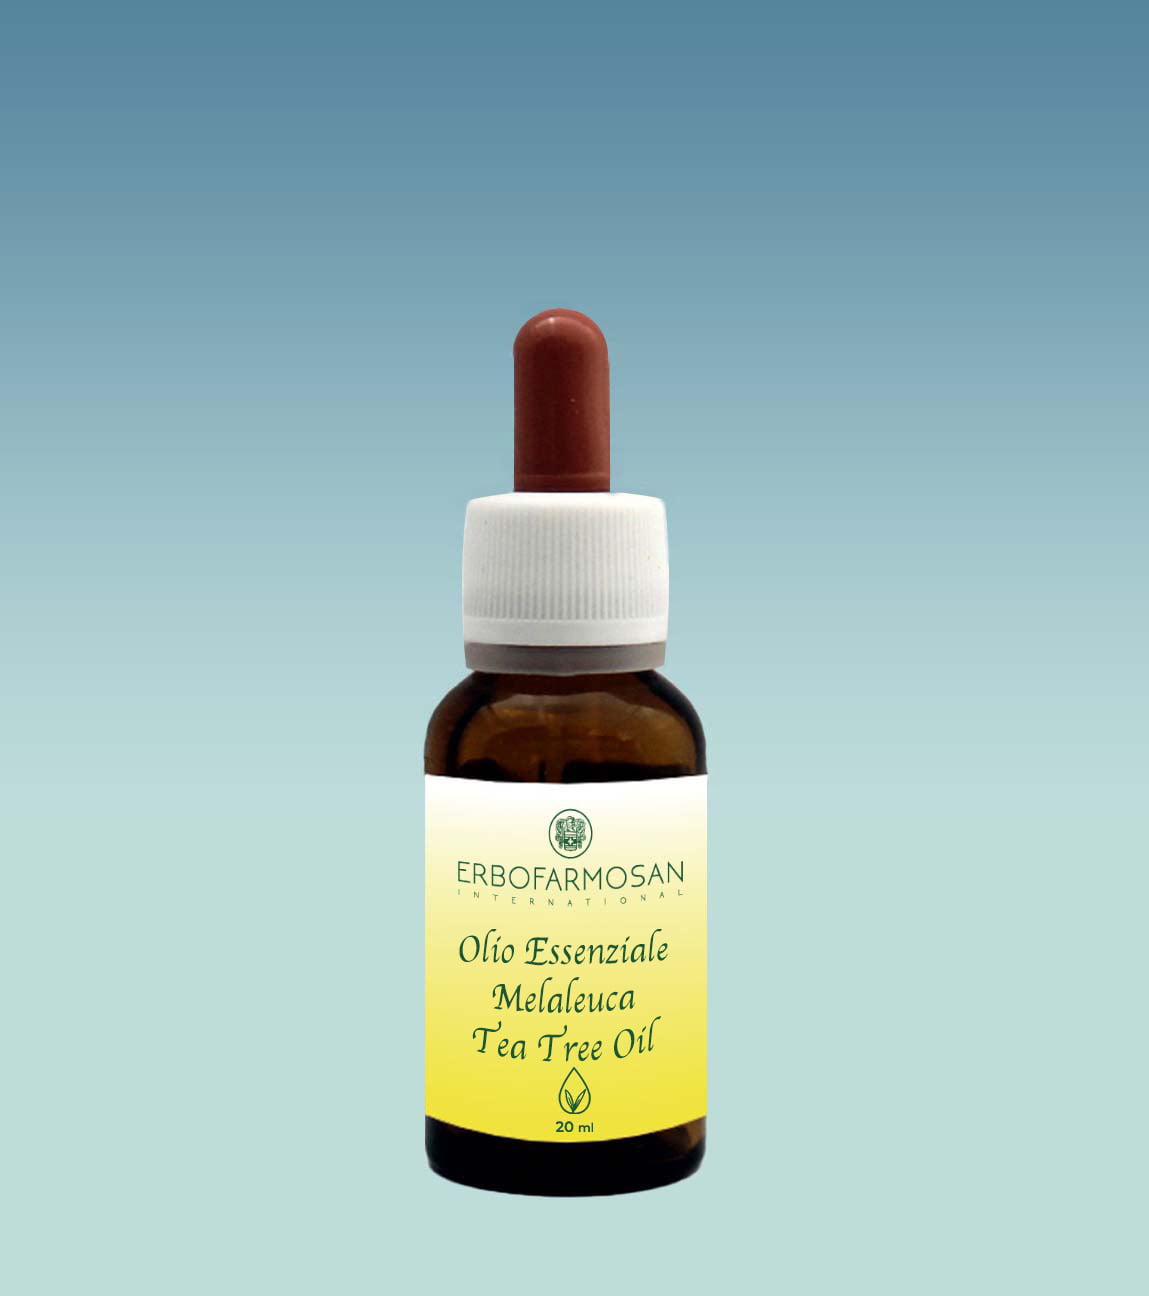 Olio essenziale Melaleuca “Tea Tree Oil”